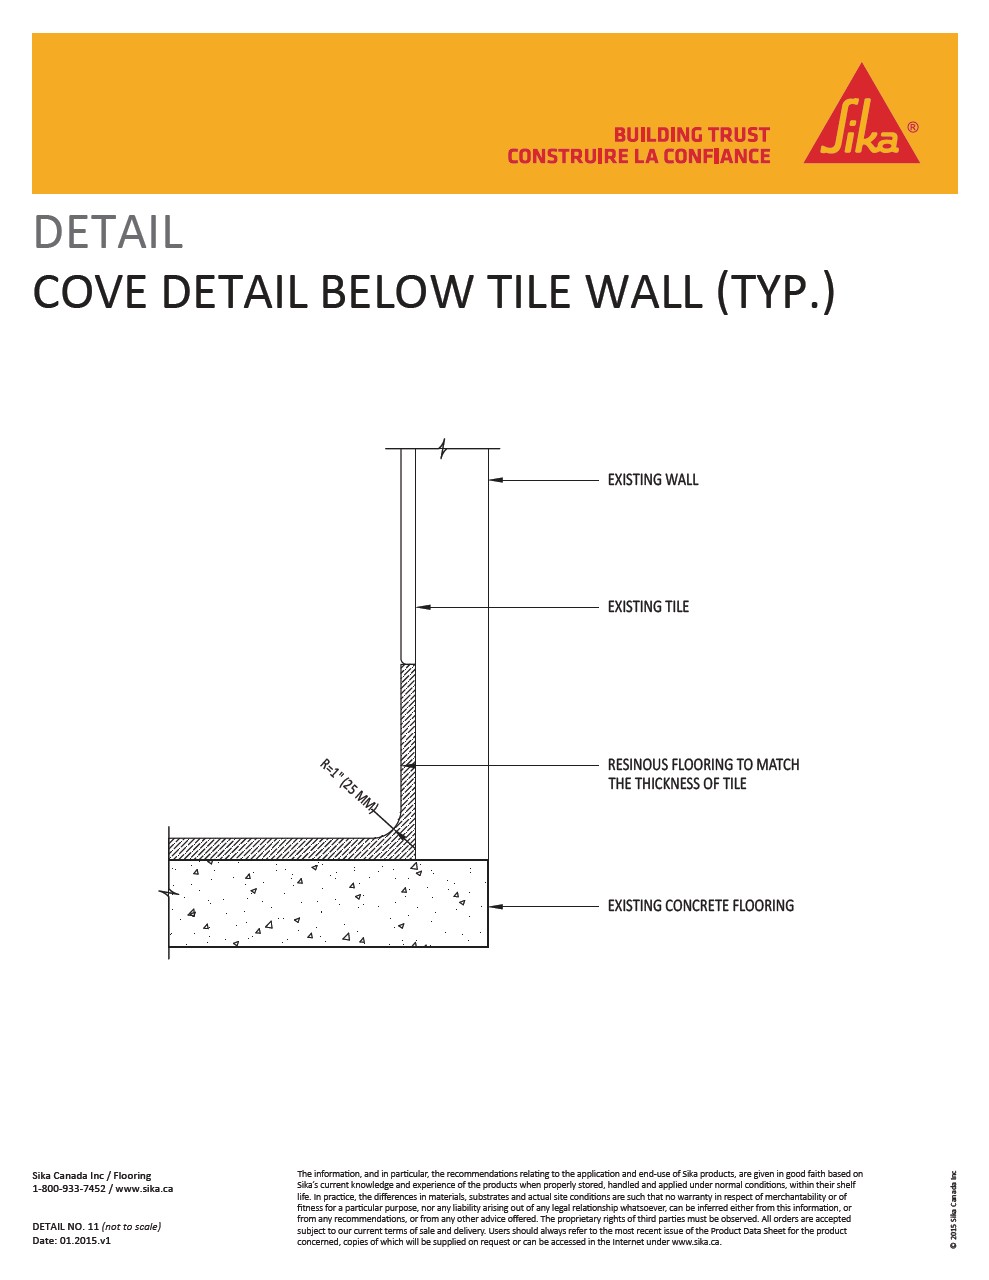 11-Cove Detail Below Tile Wall